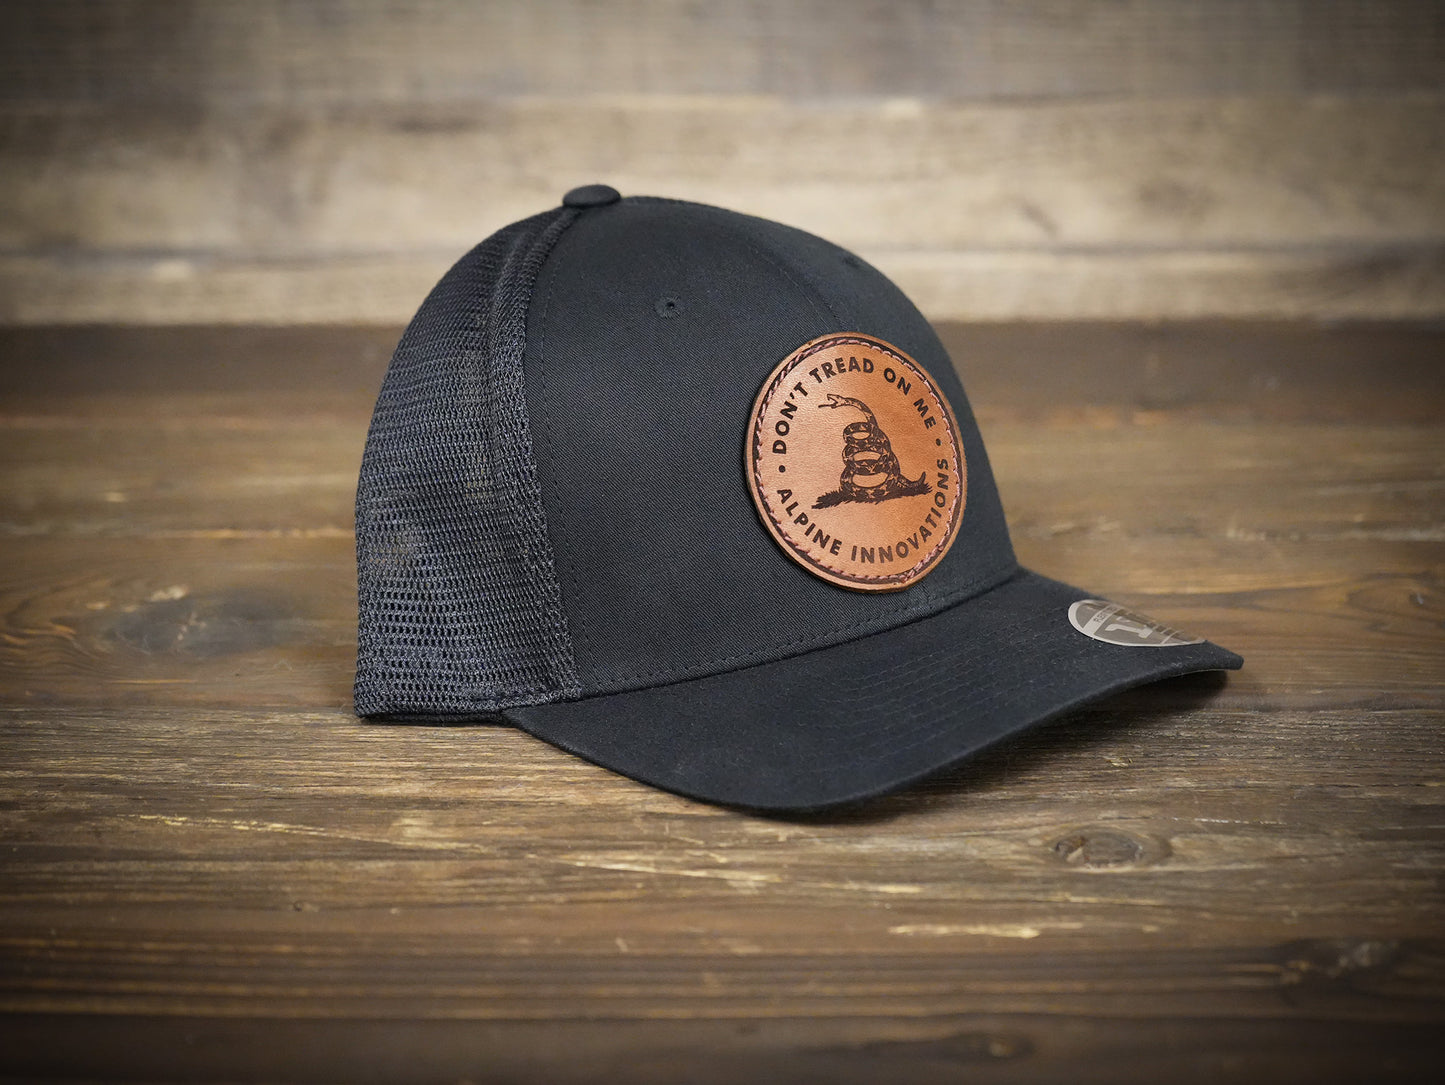 Alpine Outdoor Leather Hats